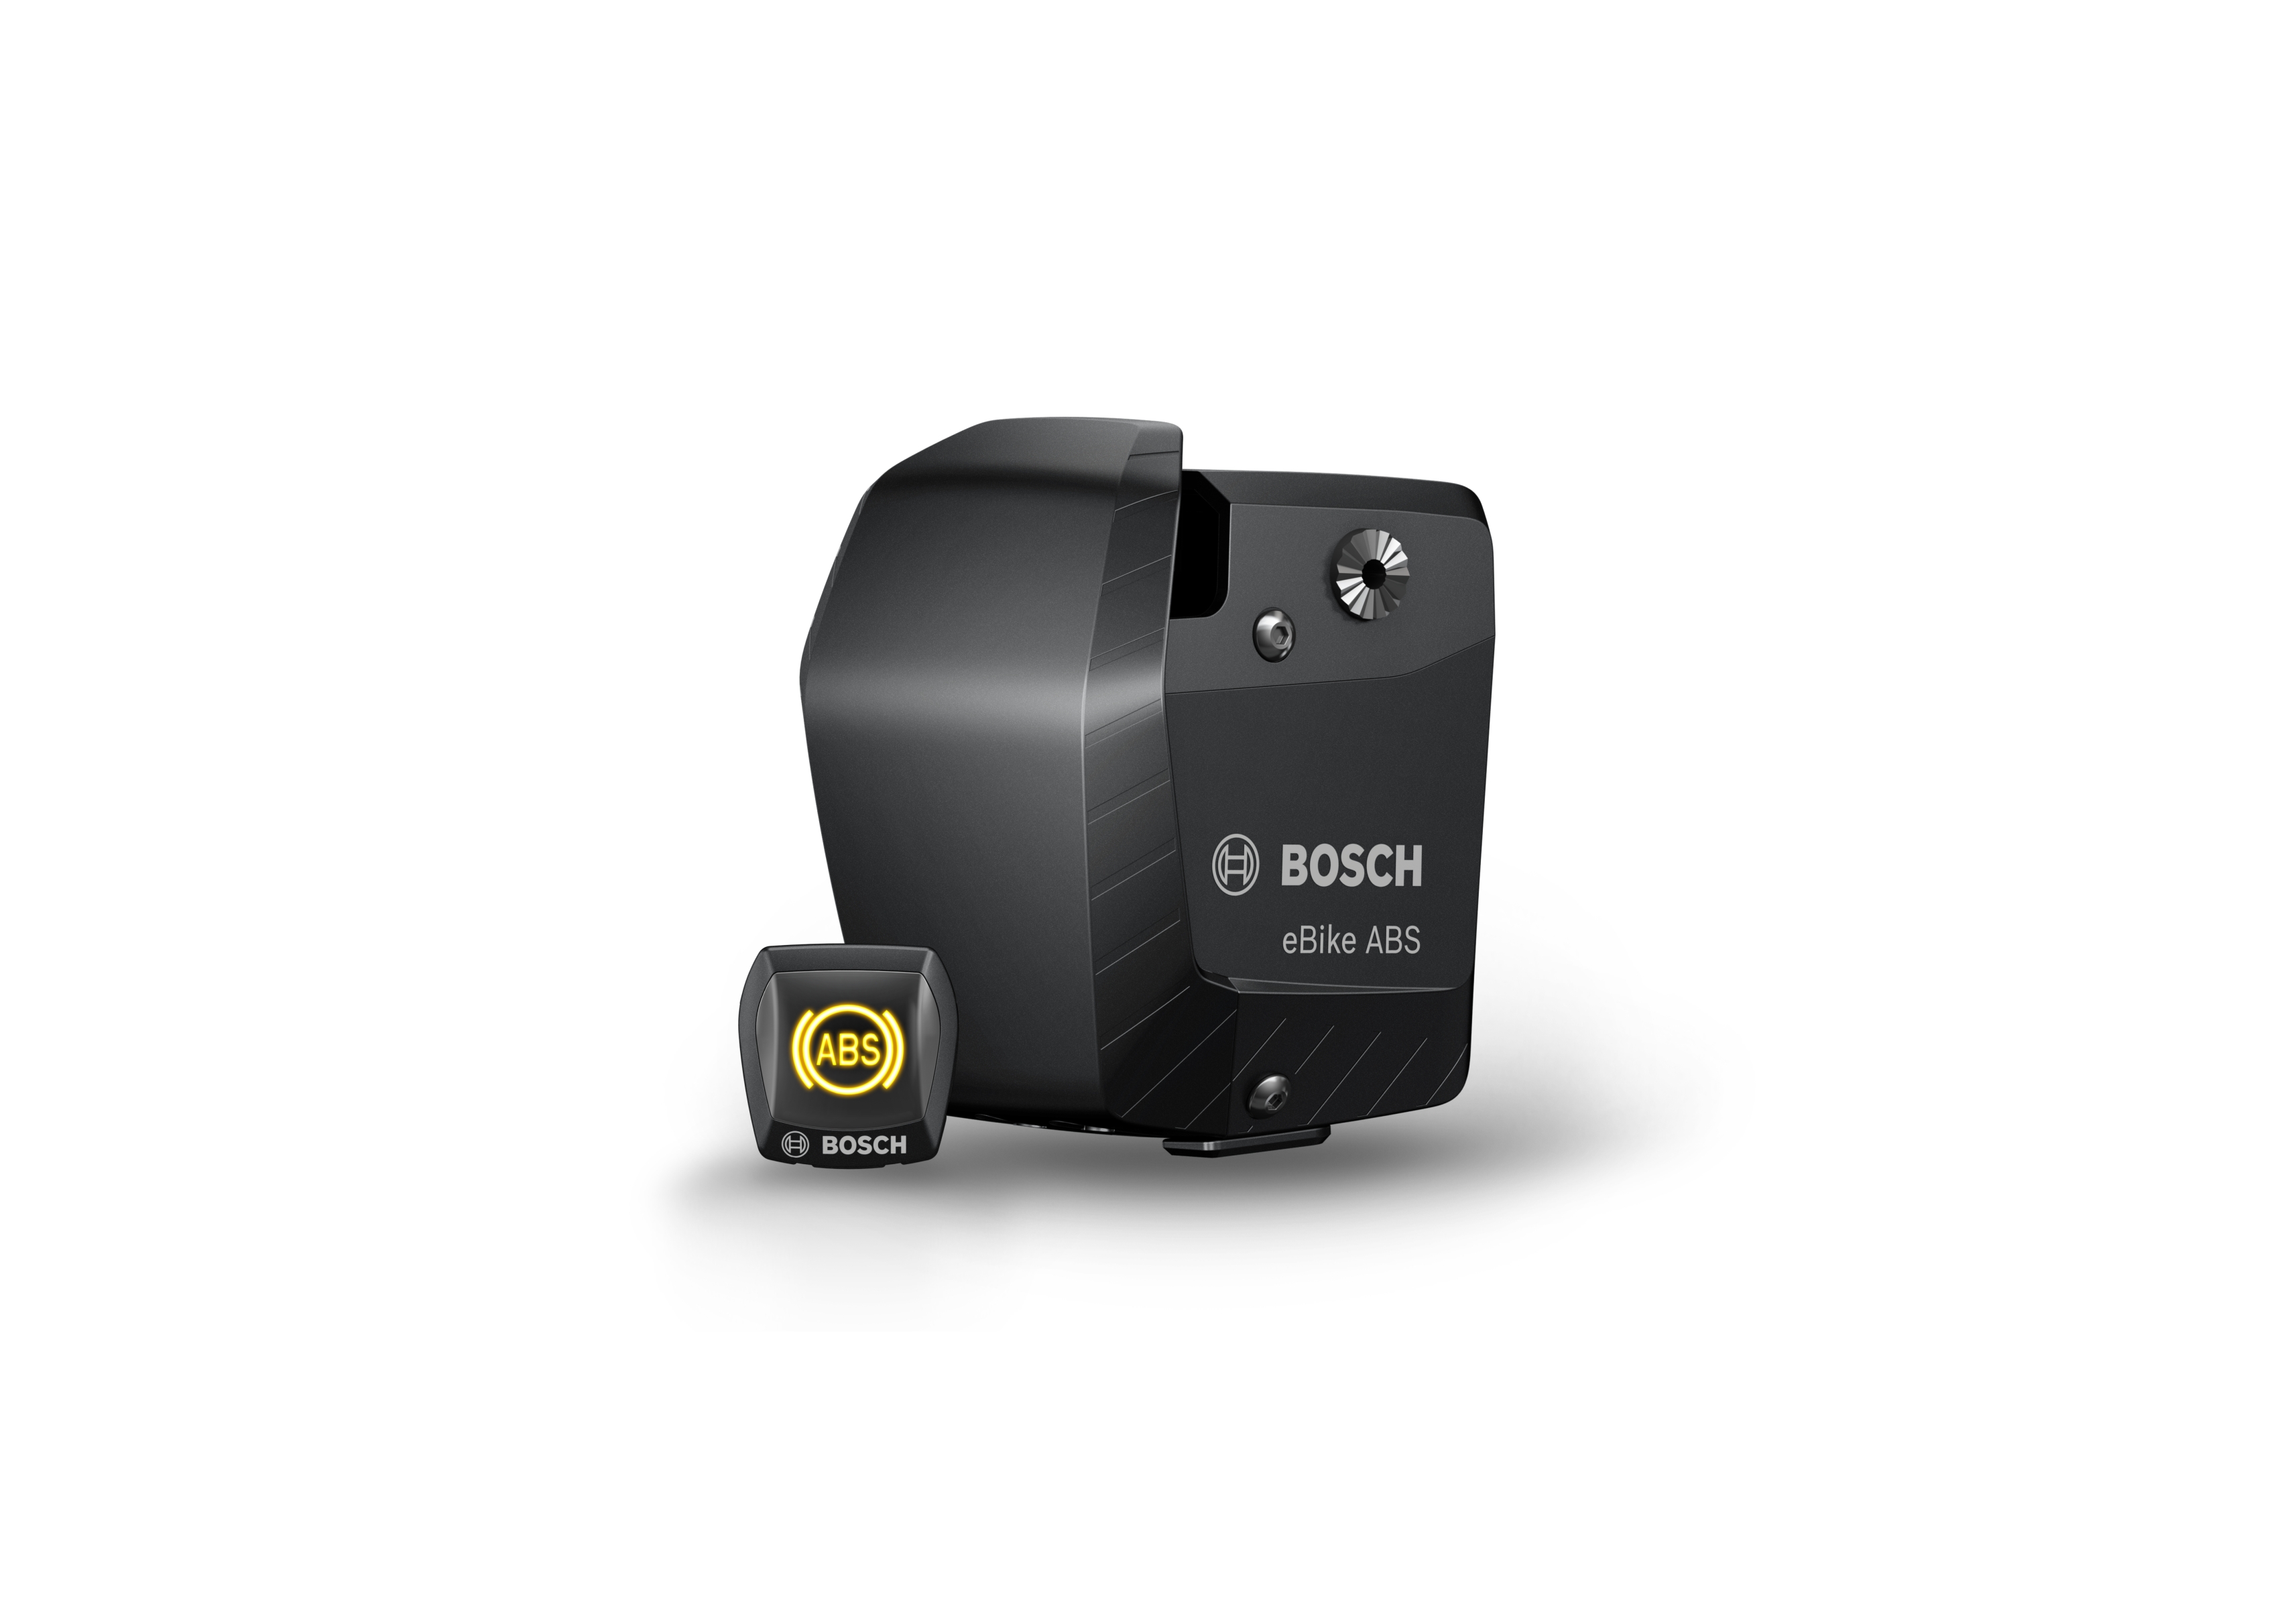 eBike ABS by Bosch